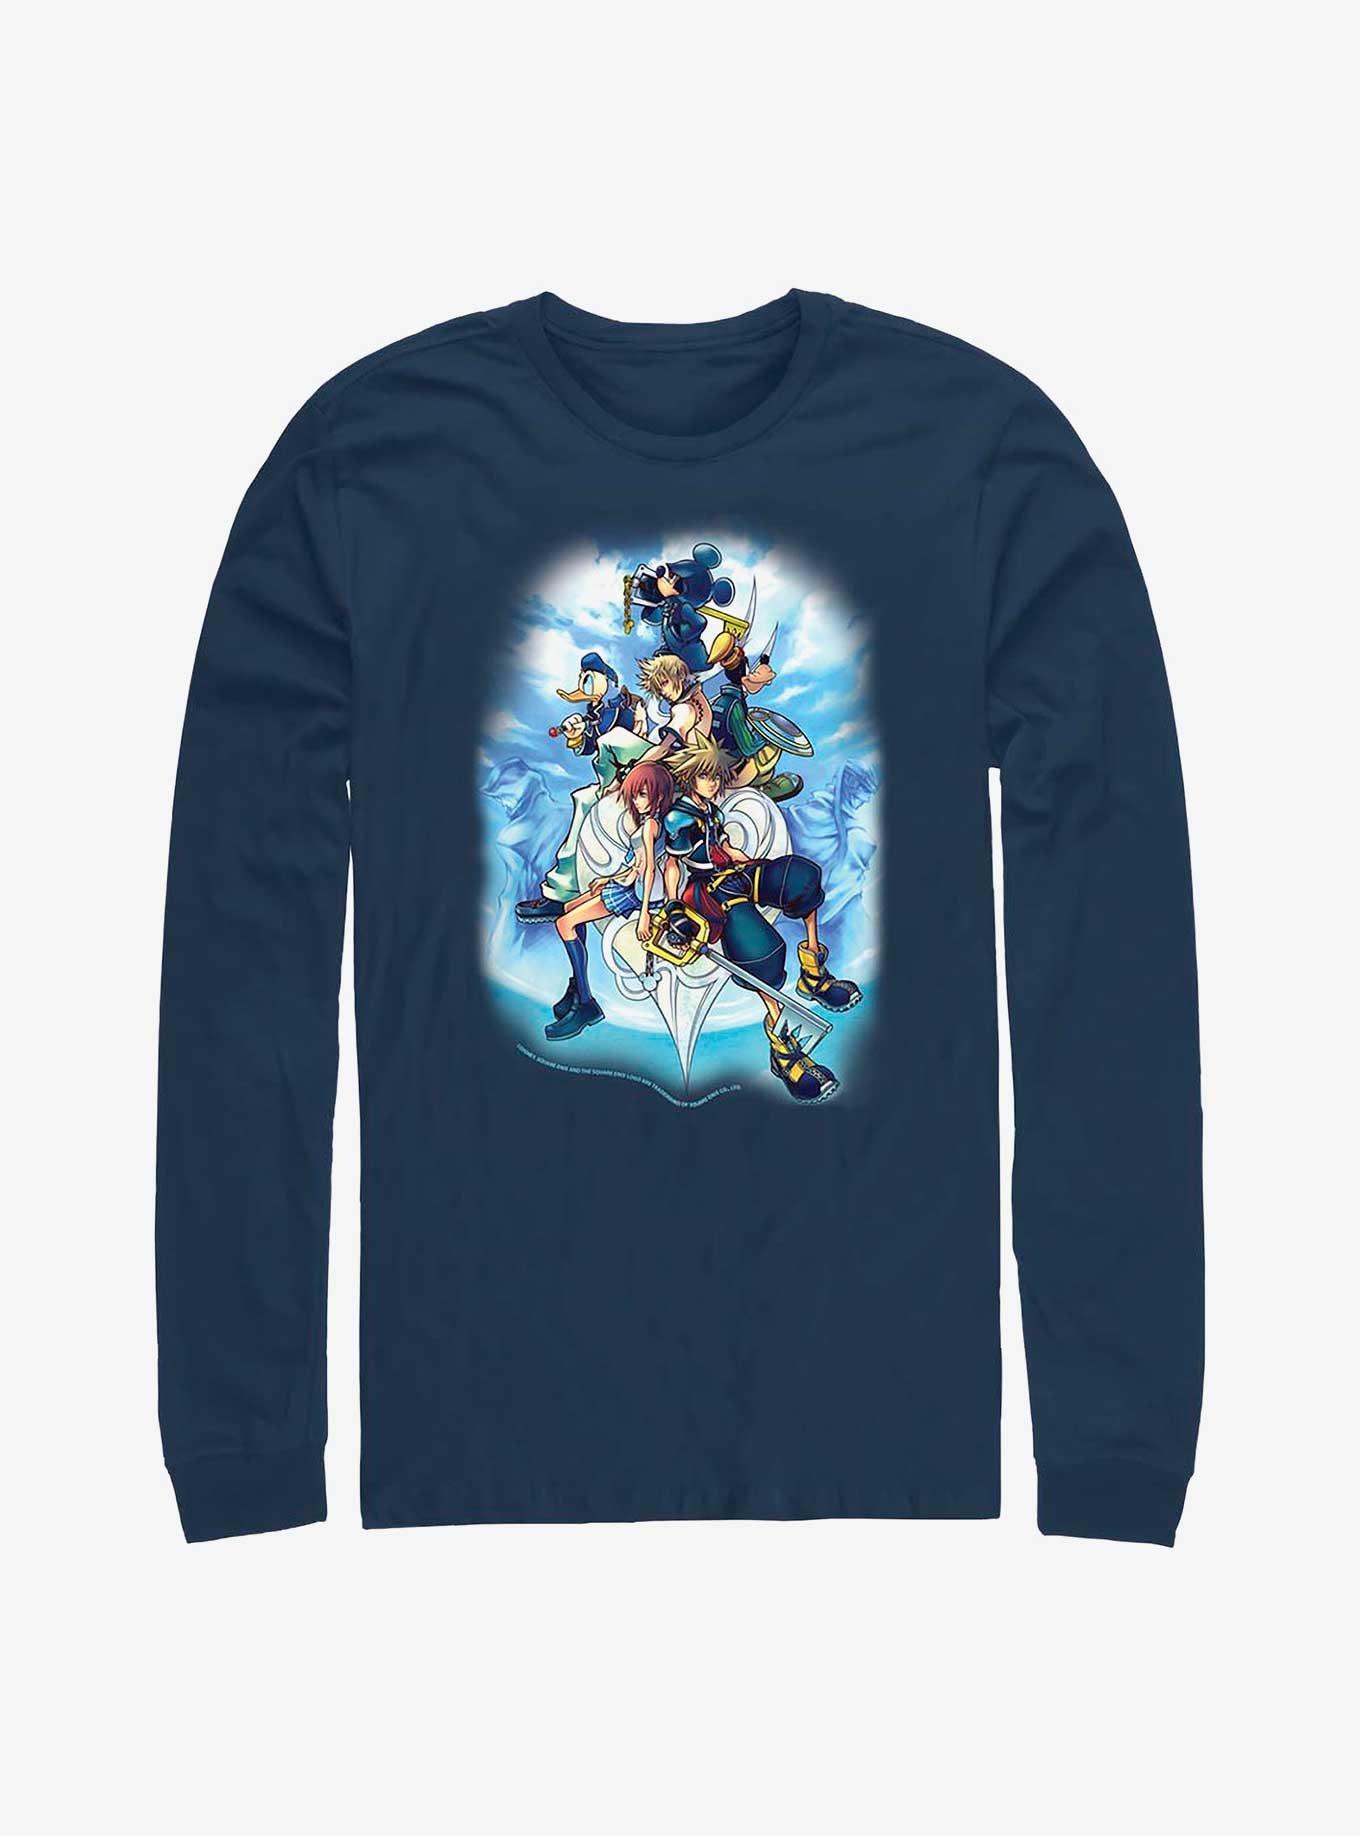 Disney Kingdom Hearts Sky Group Long-Sleeve T-Shirt